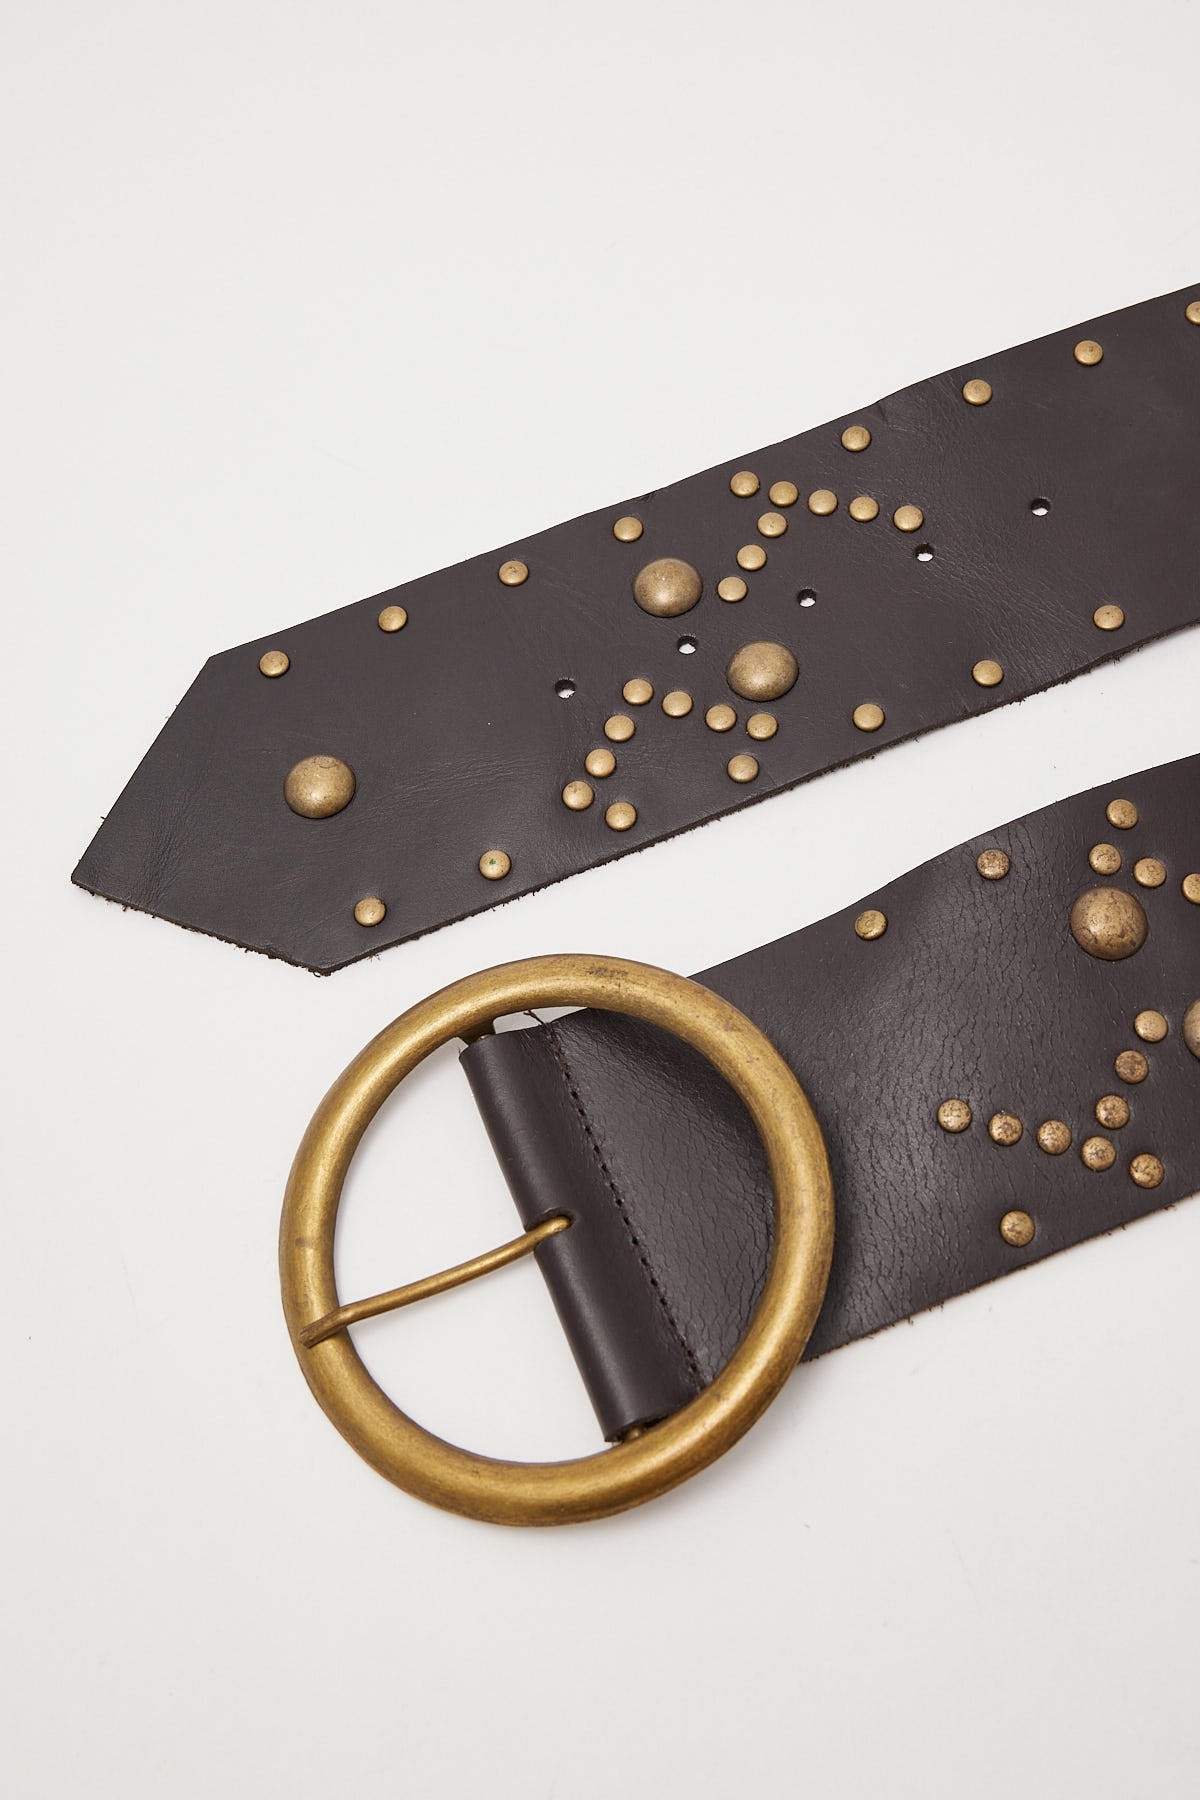 Dakota 501 Vintage Deadstock Oversized Leather Studded Belt Brown/Gold